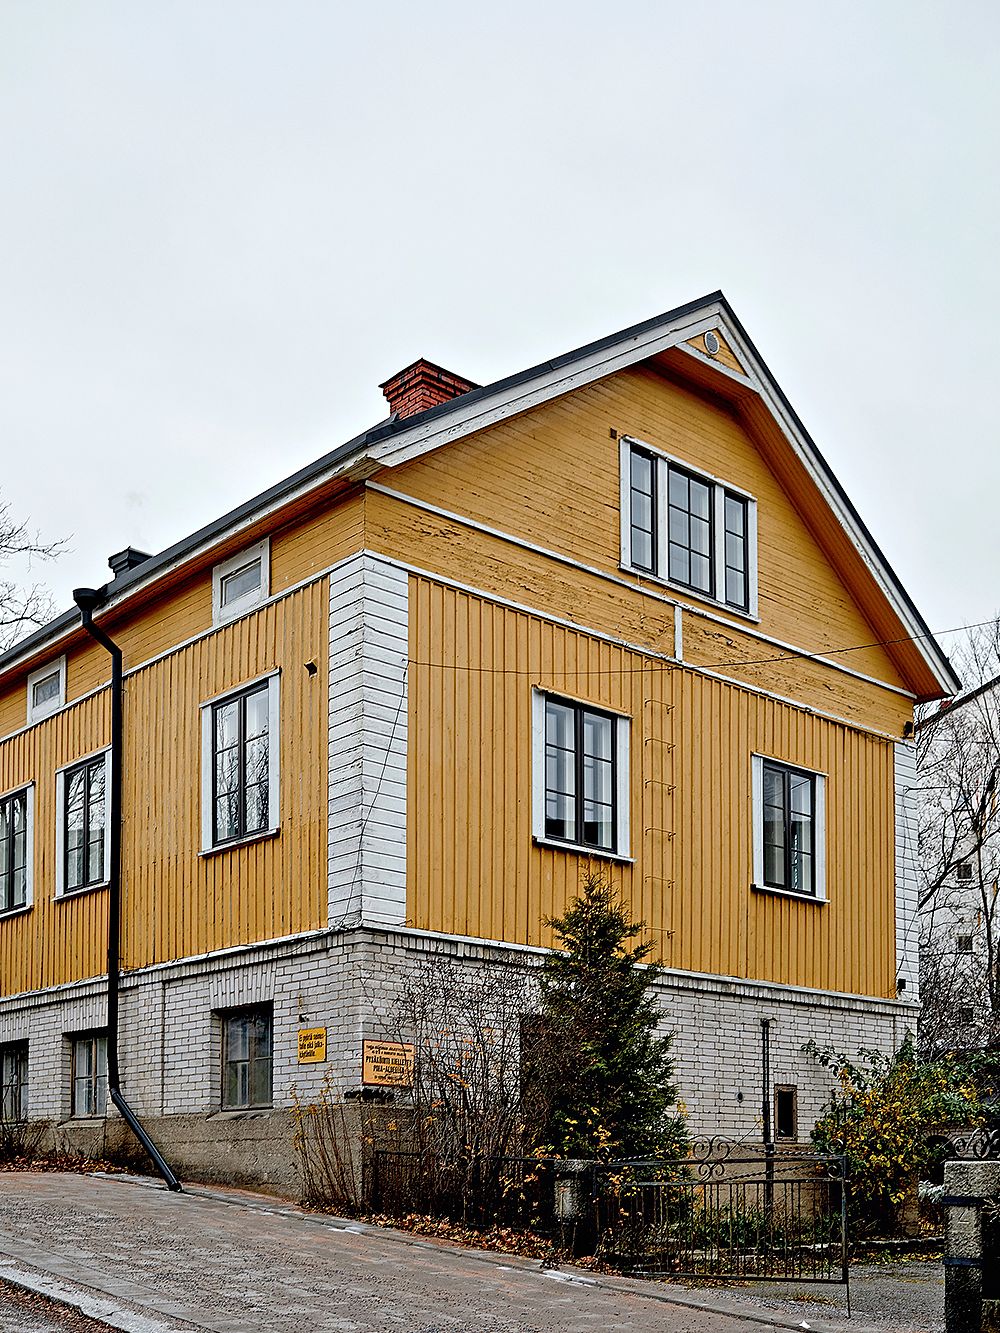 1920s wooden house in Turku